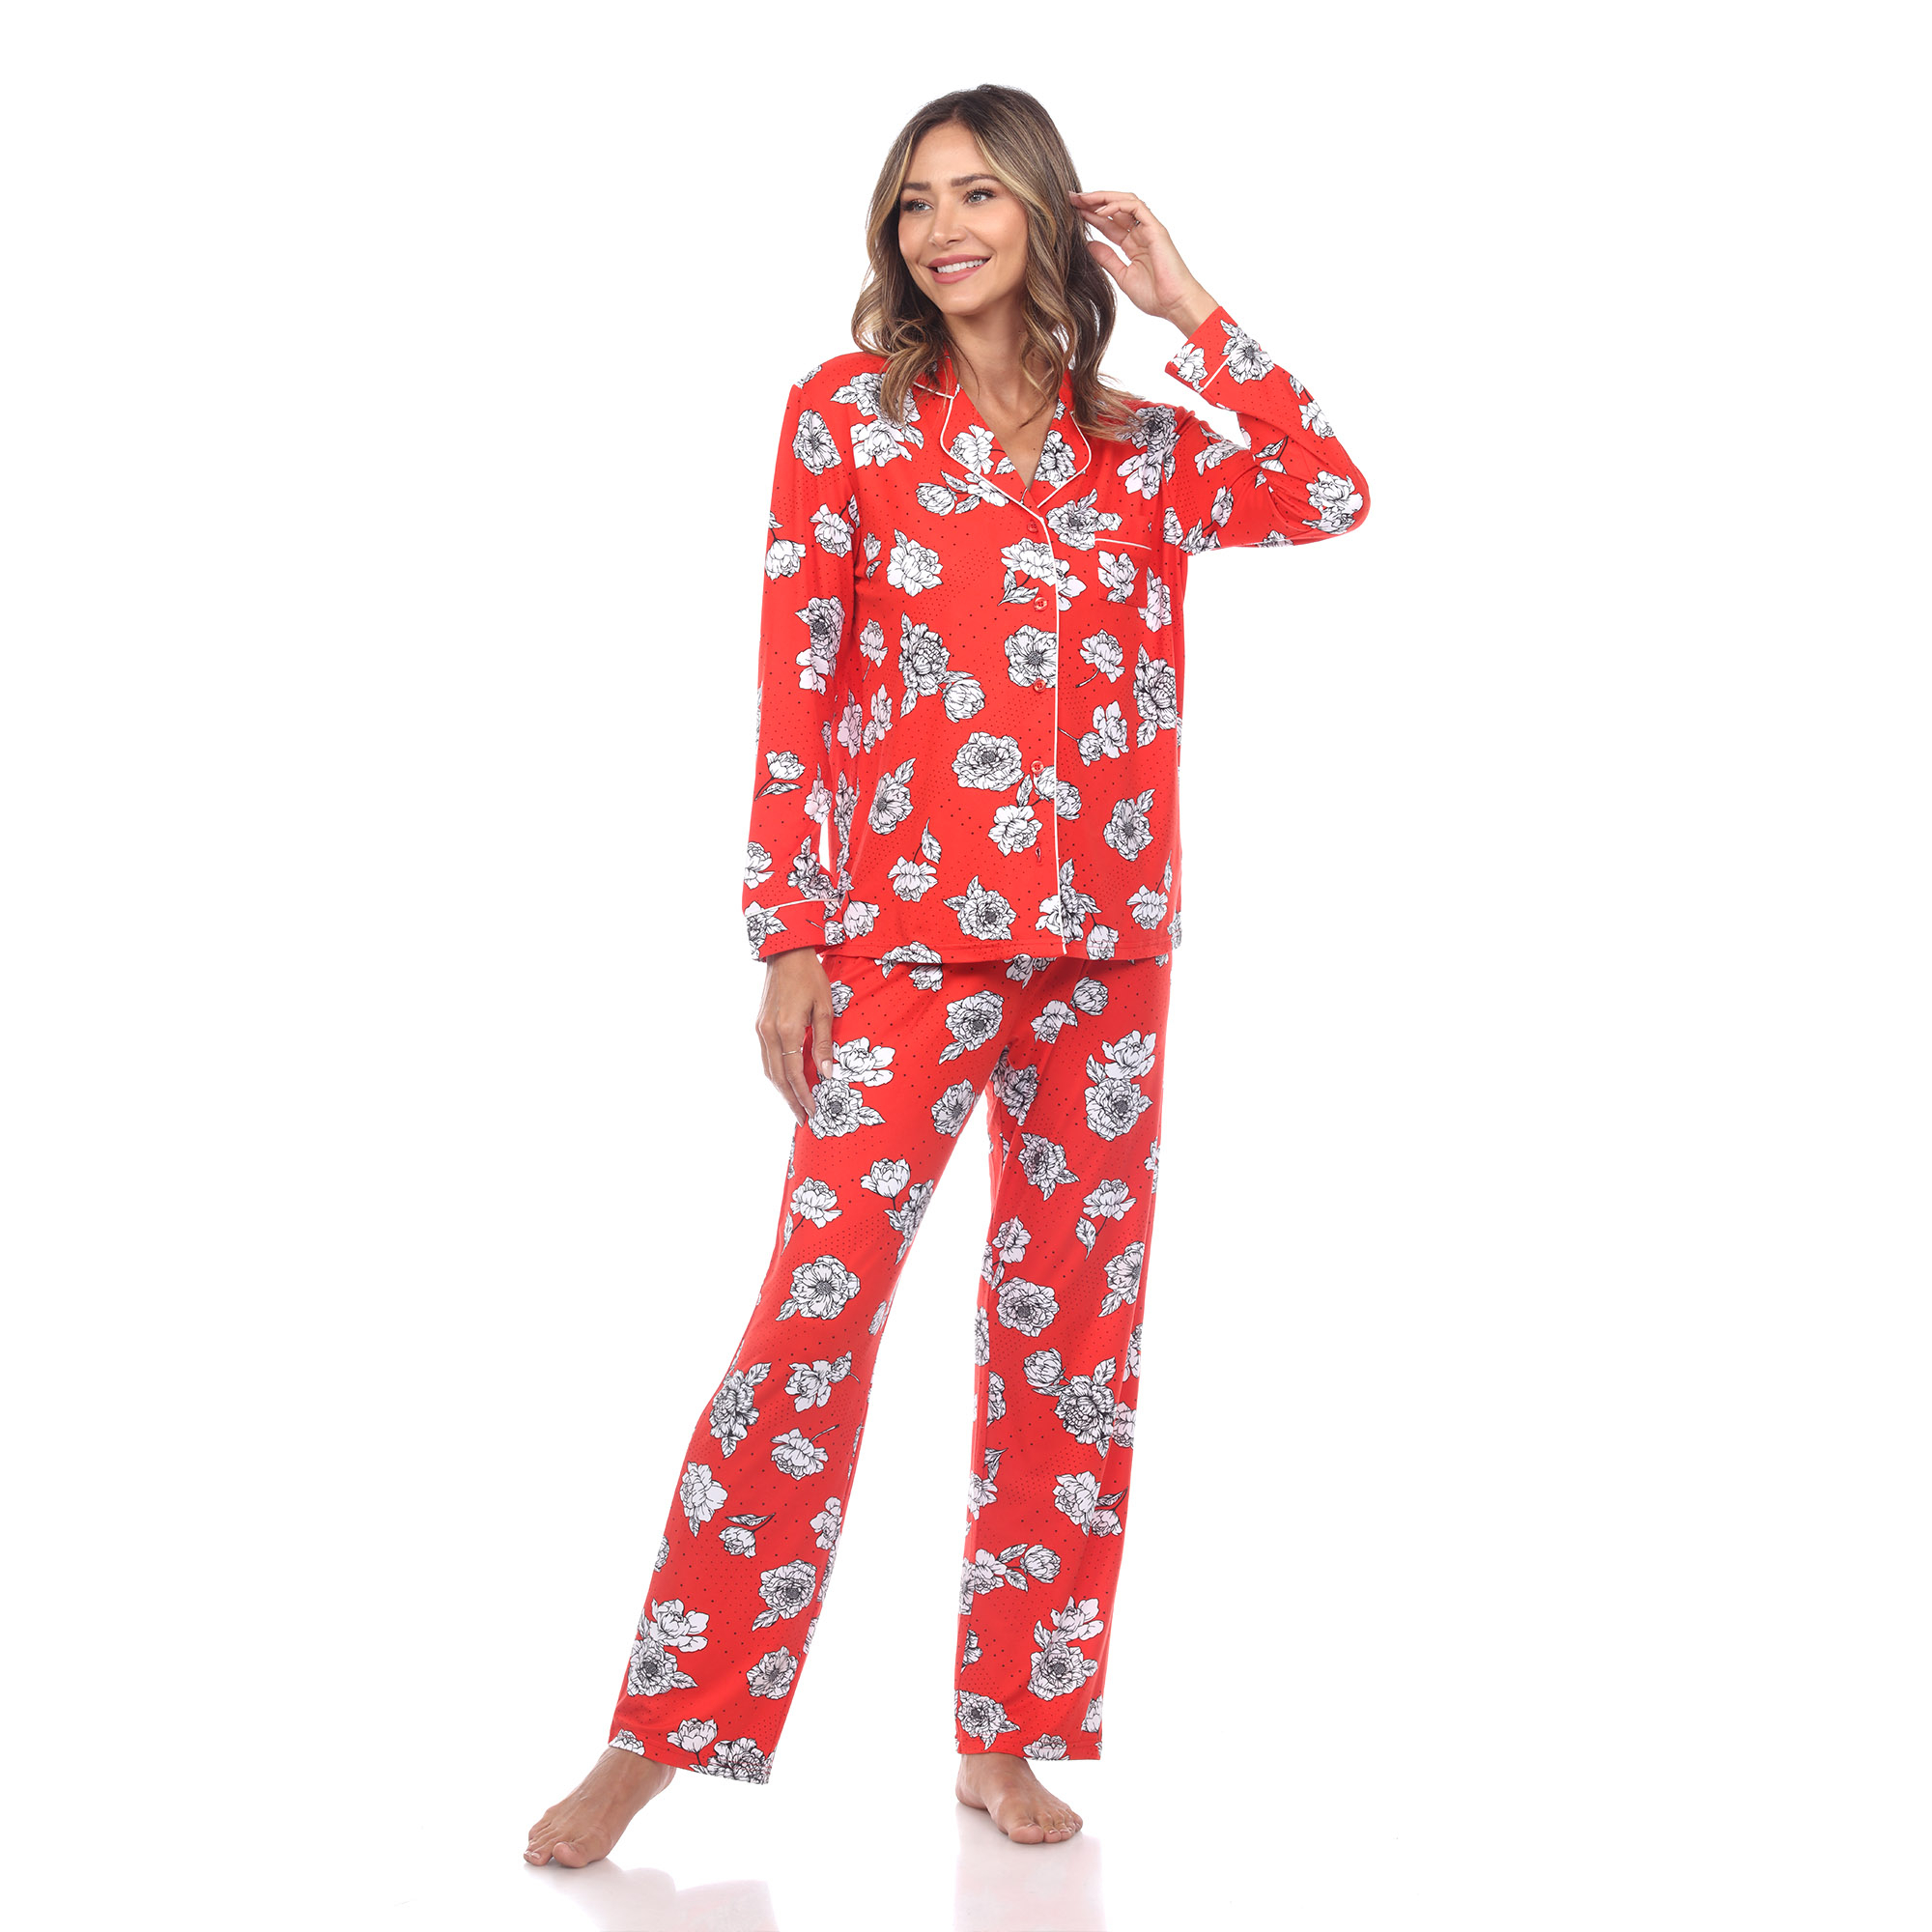 White Mark Women's Long Sleeve Floral Pajama Set - Red, Medium